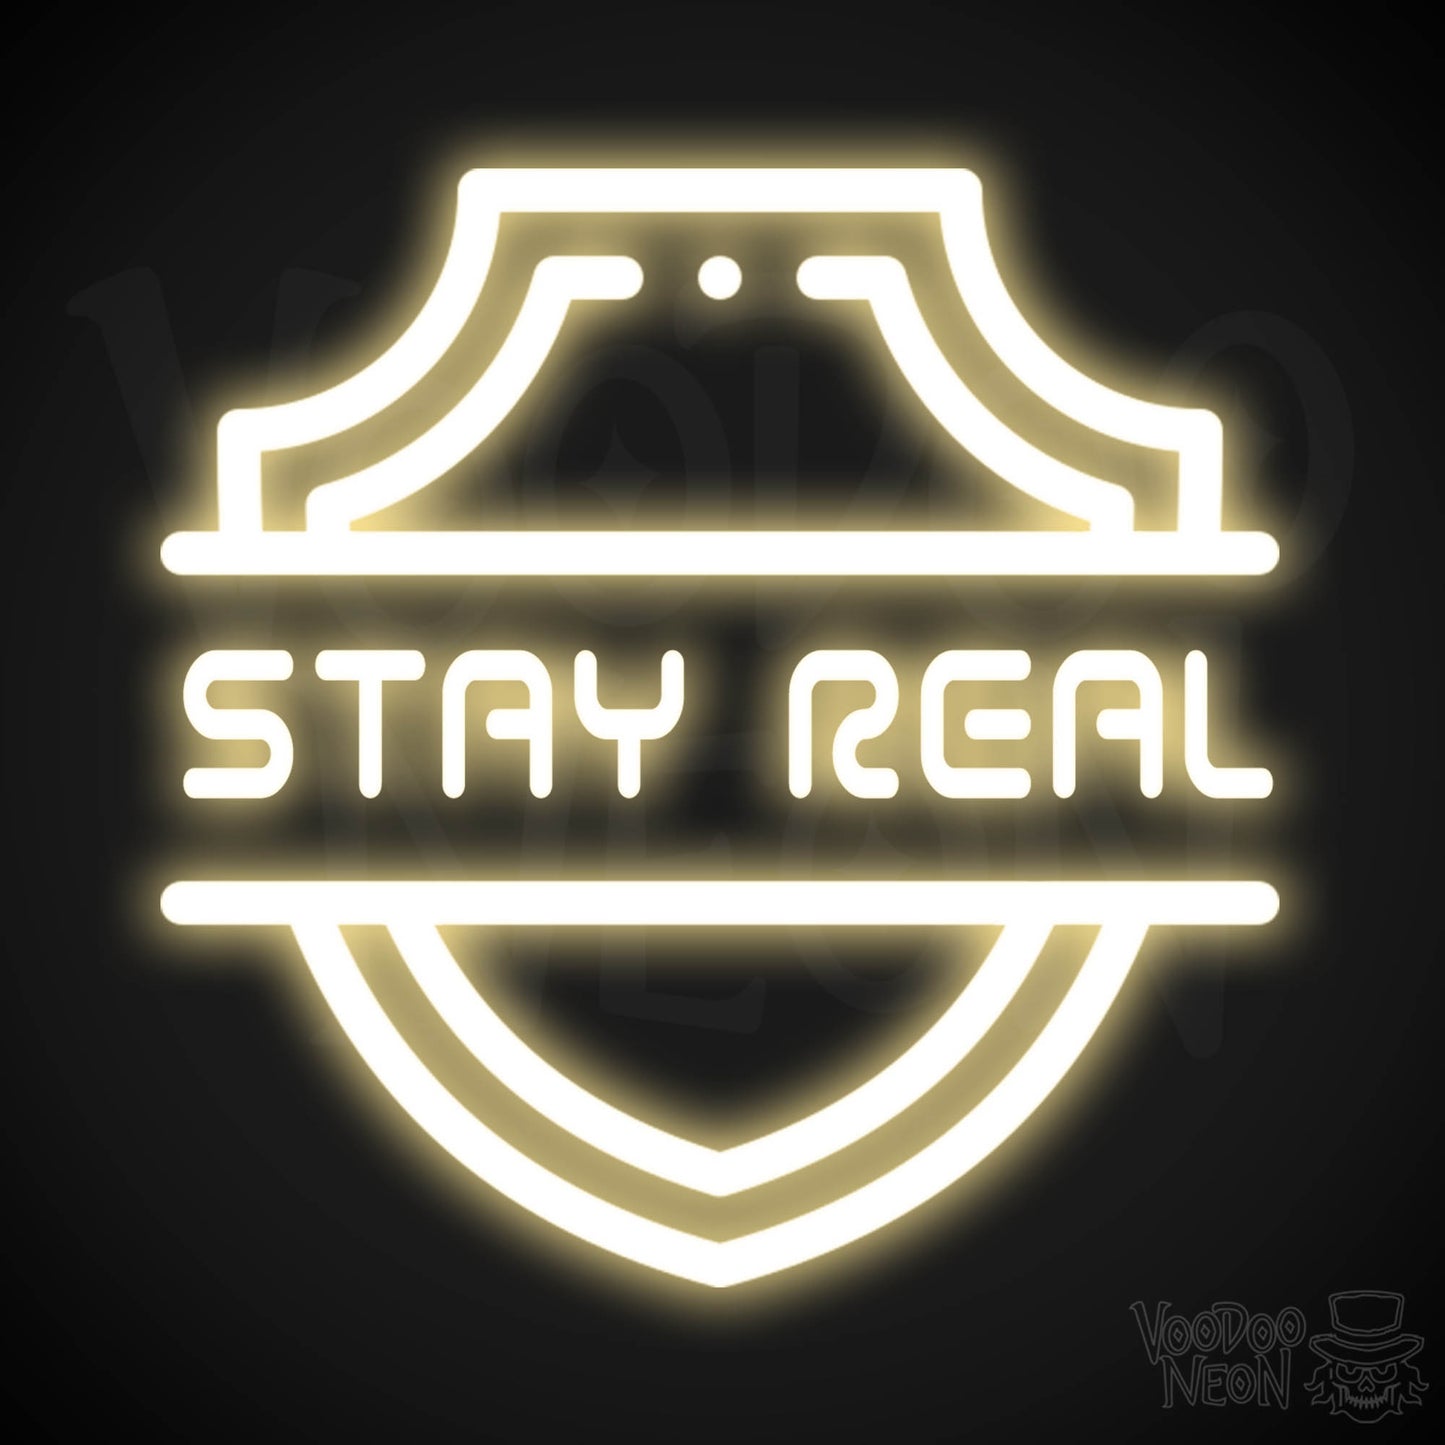 Stay Real Neon Sign - Neon Stay Real Sign - Neon Wall Art - Color Warm White